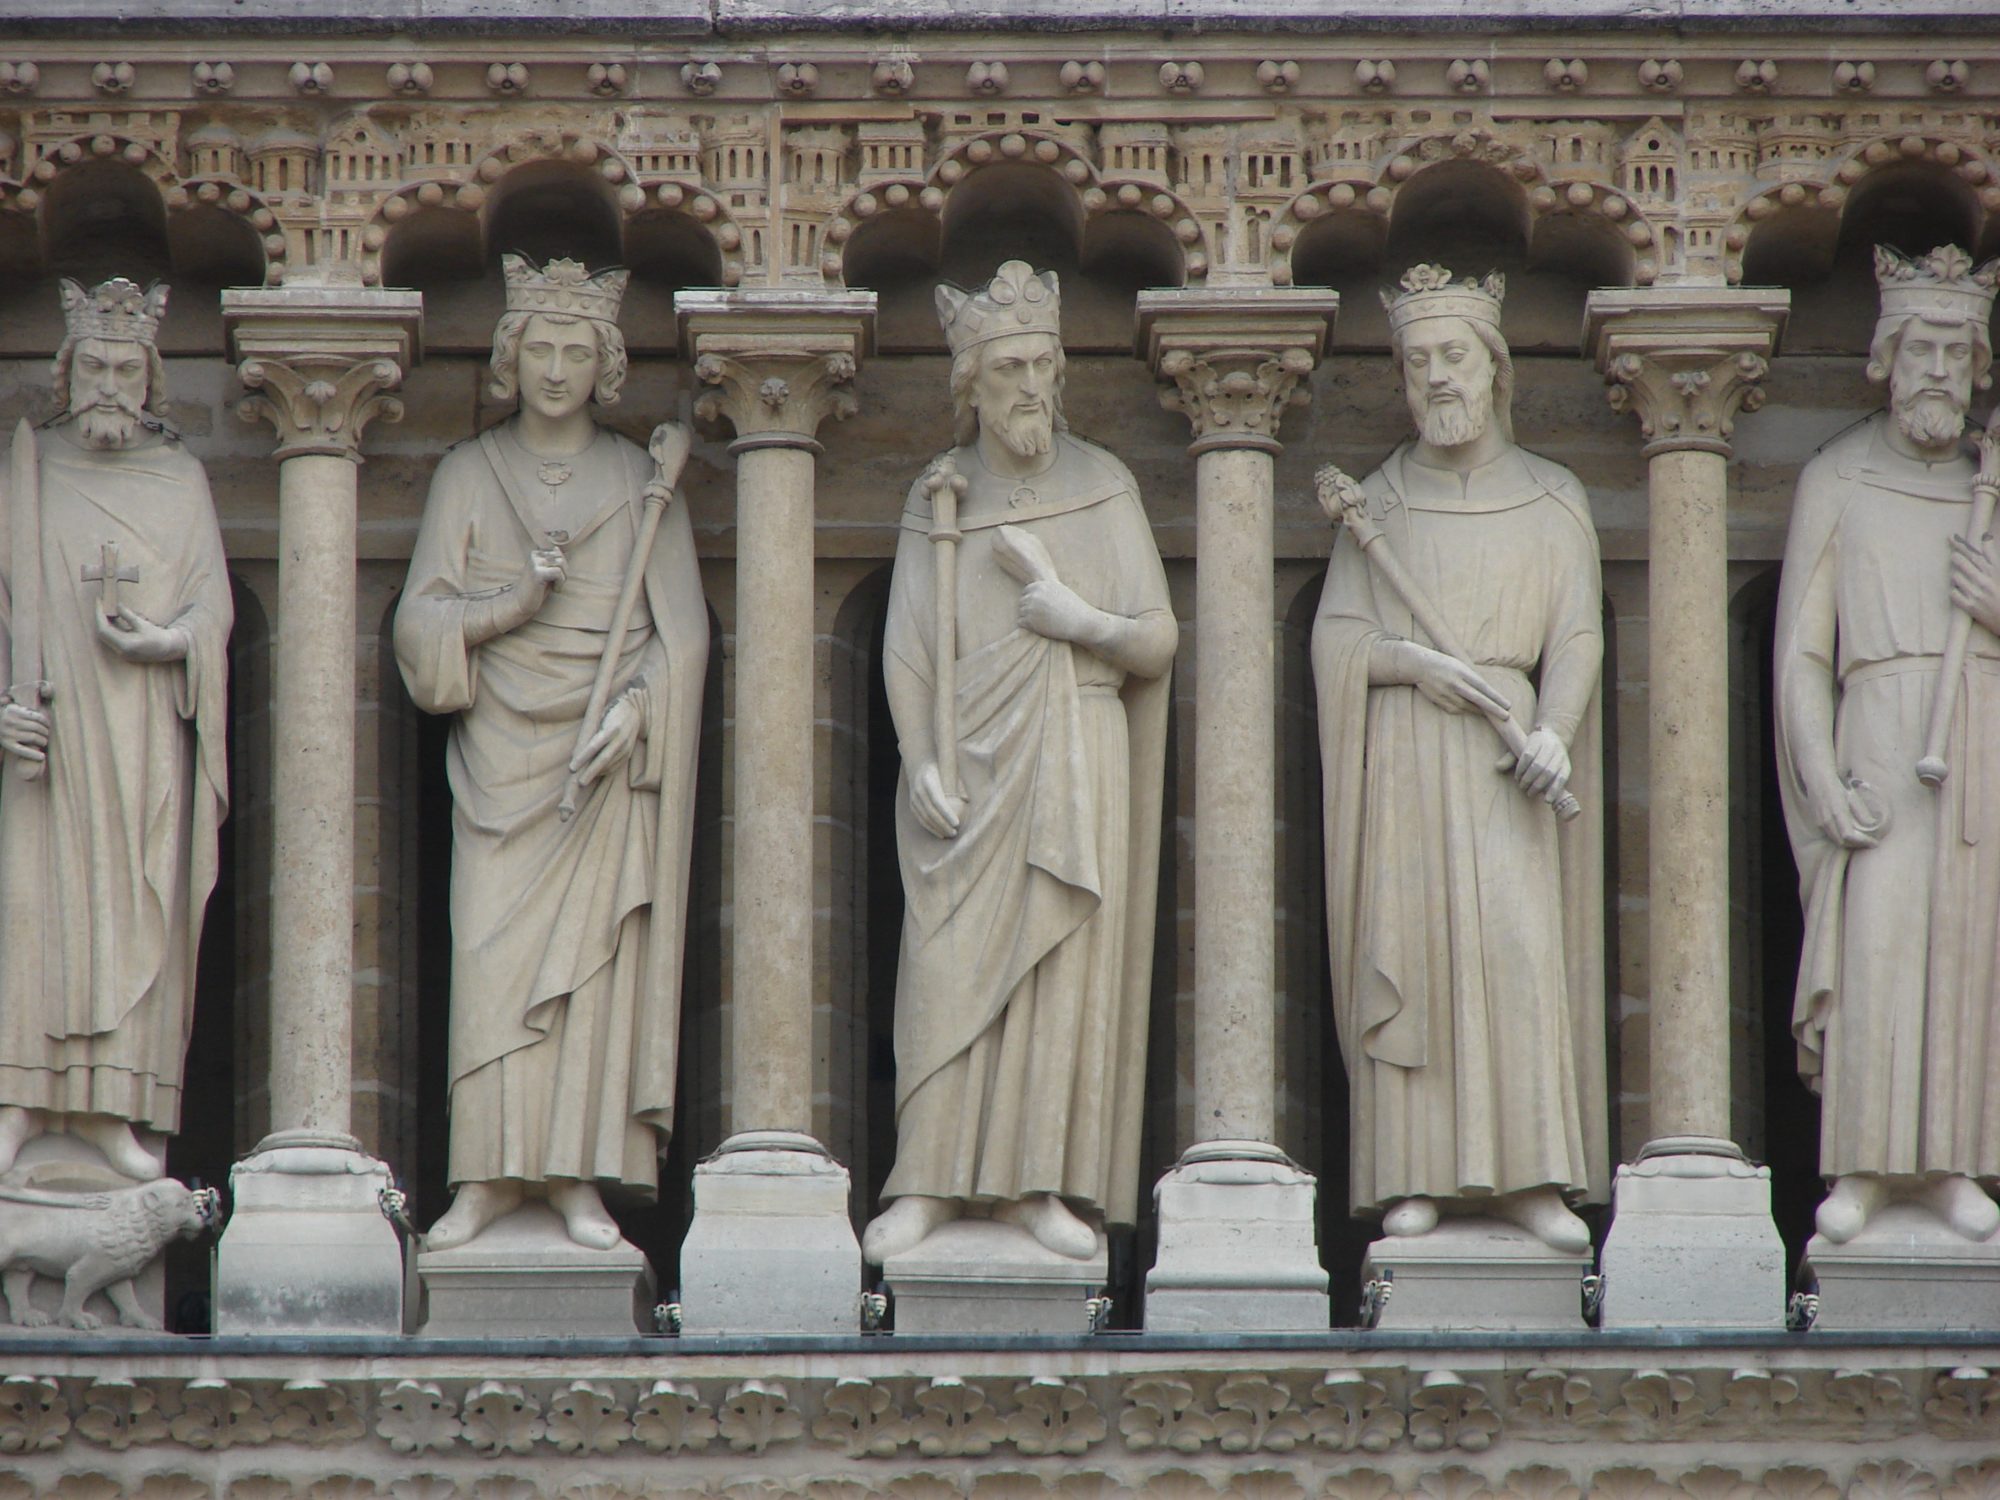 Throne-Altar Nostalgia: Appeal of Catholic Integralism Grows